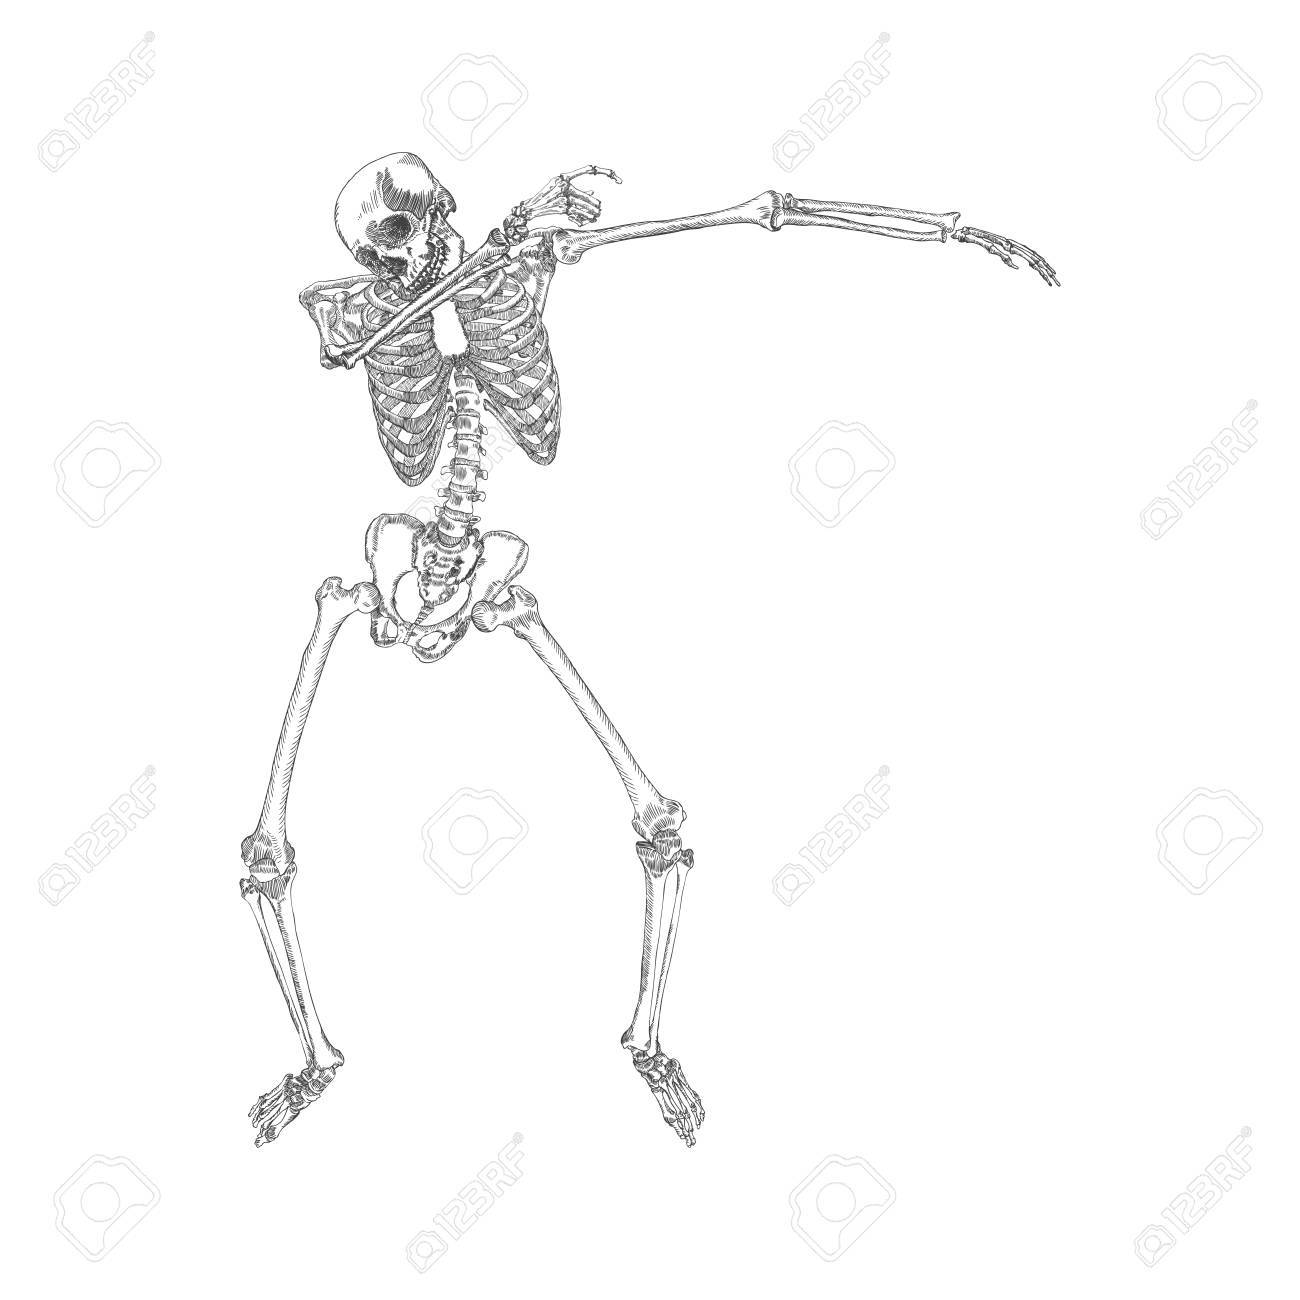 Human Skeleton Making DAB Perform Dabbing Dance Move Gesture